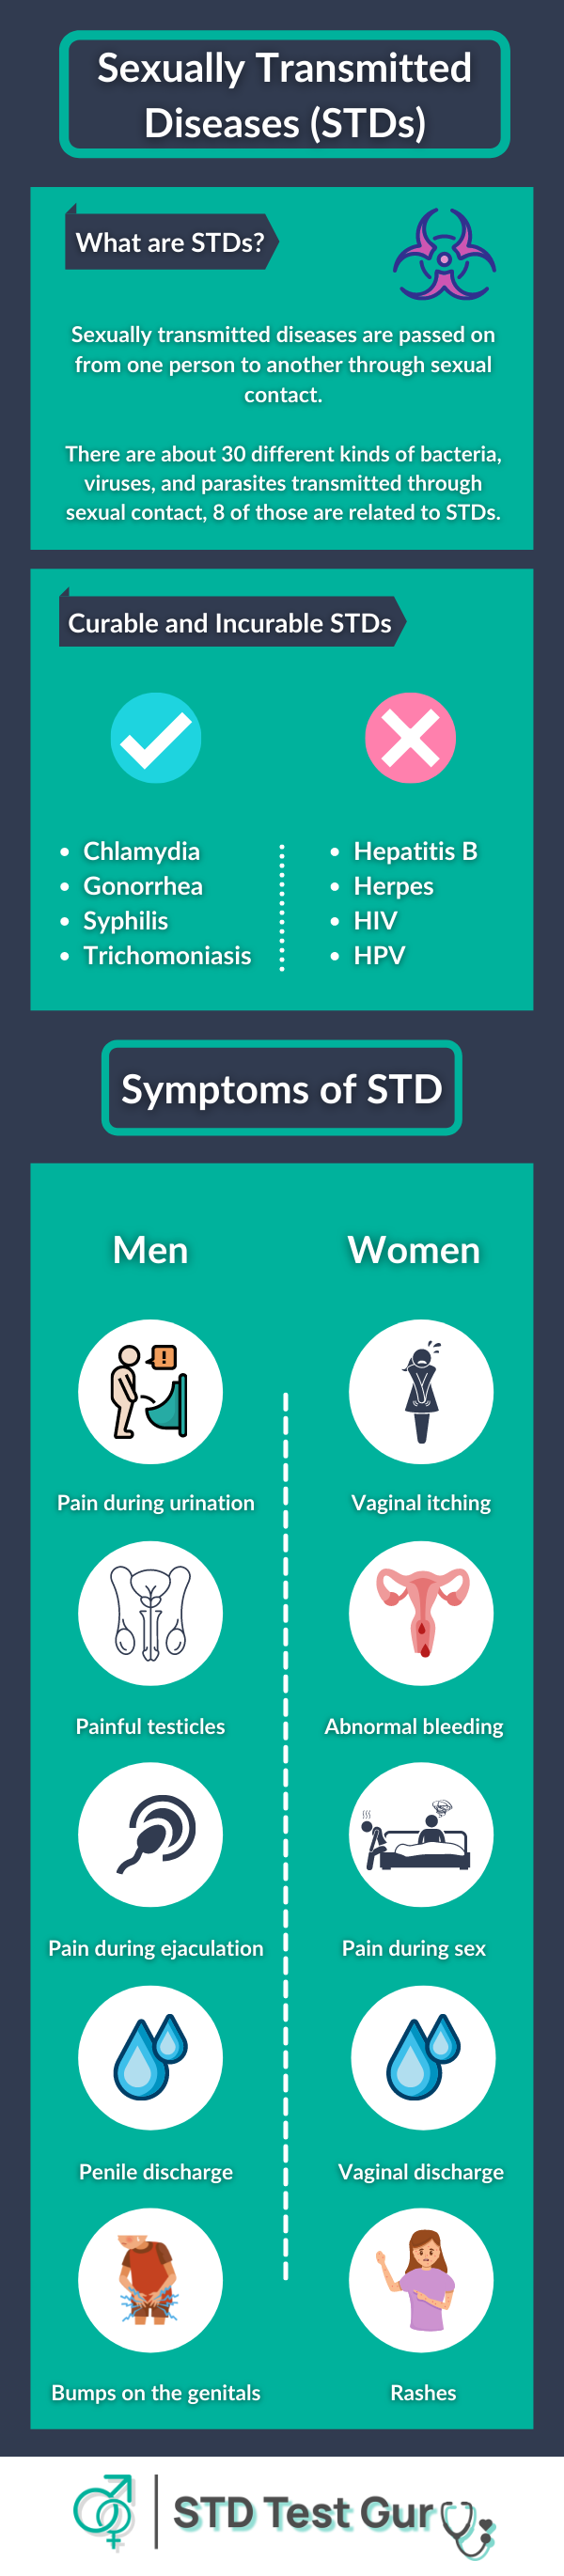 STDs Symptoms in Men and Women